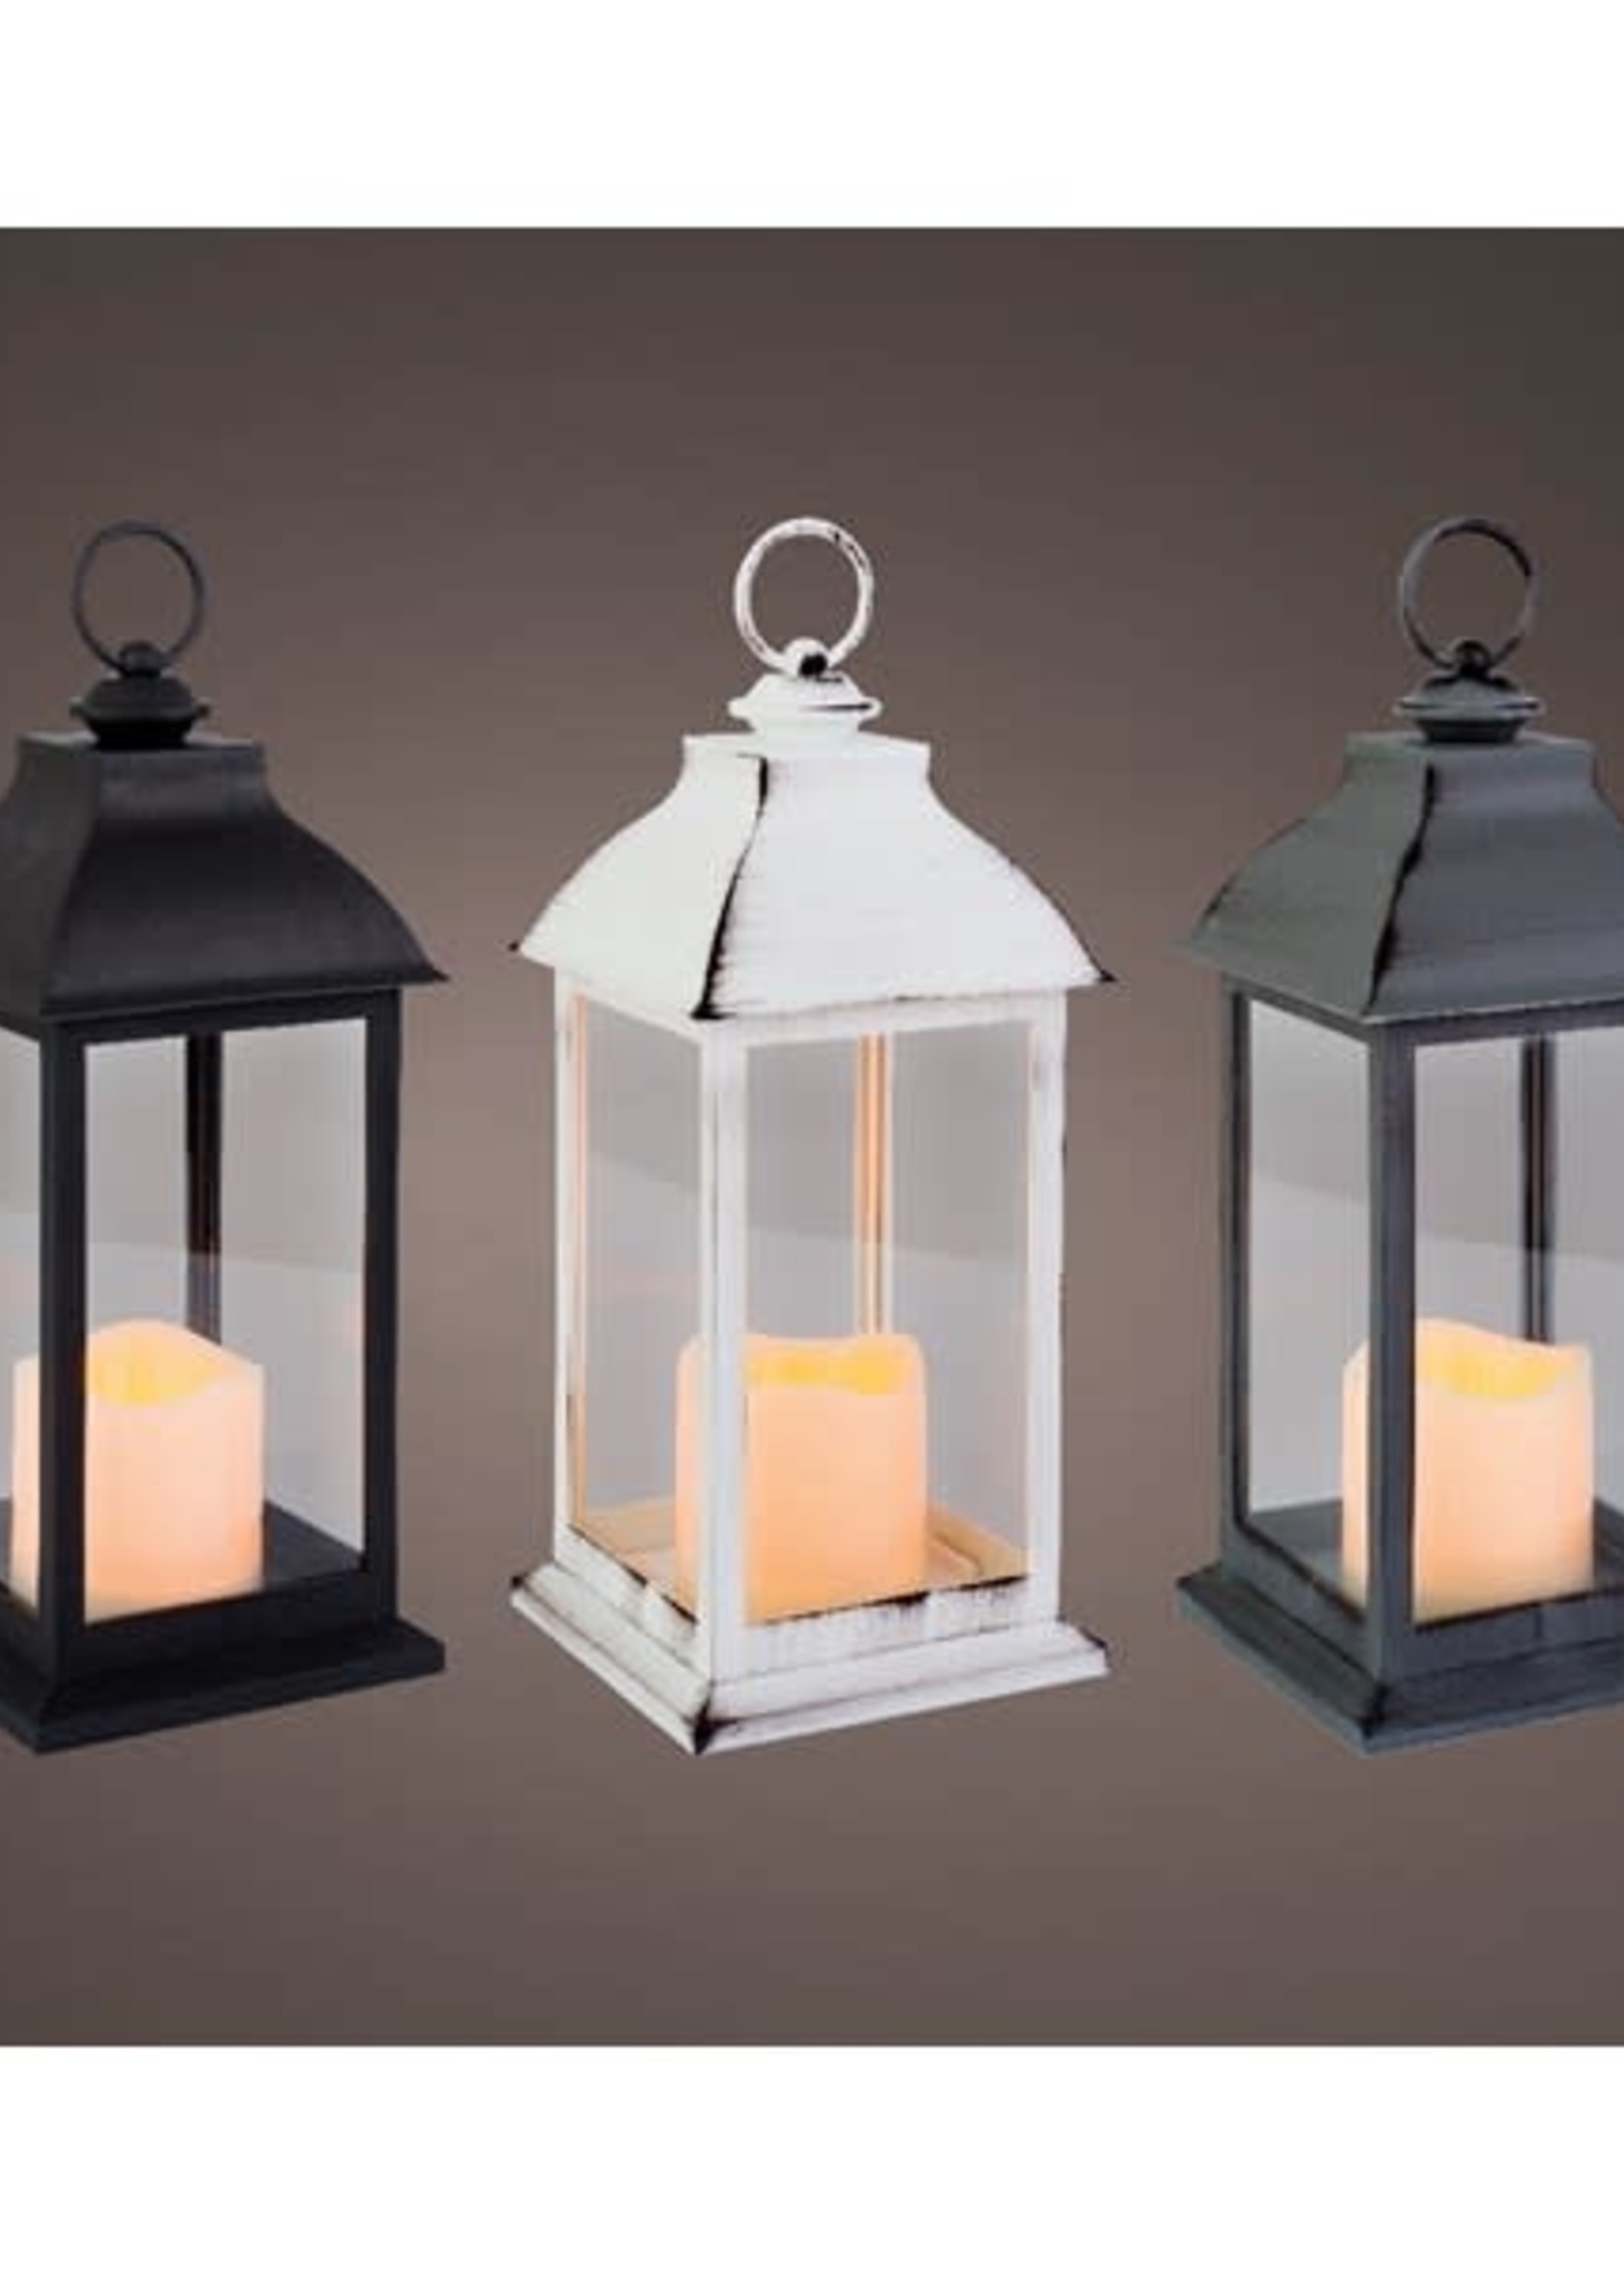 Design Decor LED lantern plastic steady BO indoor 3 colors large